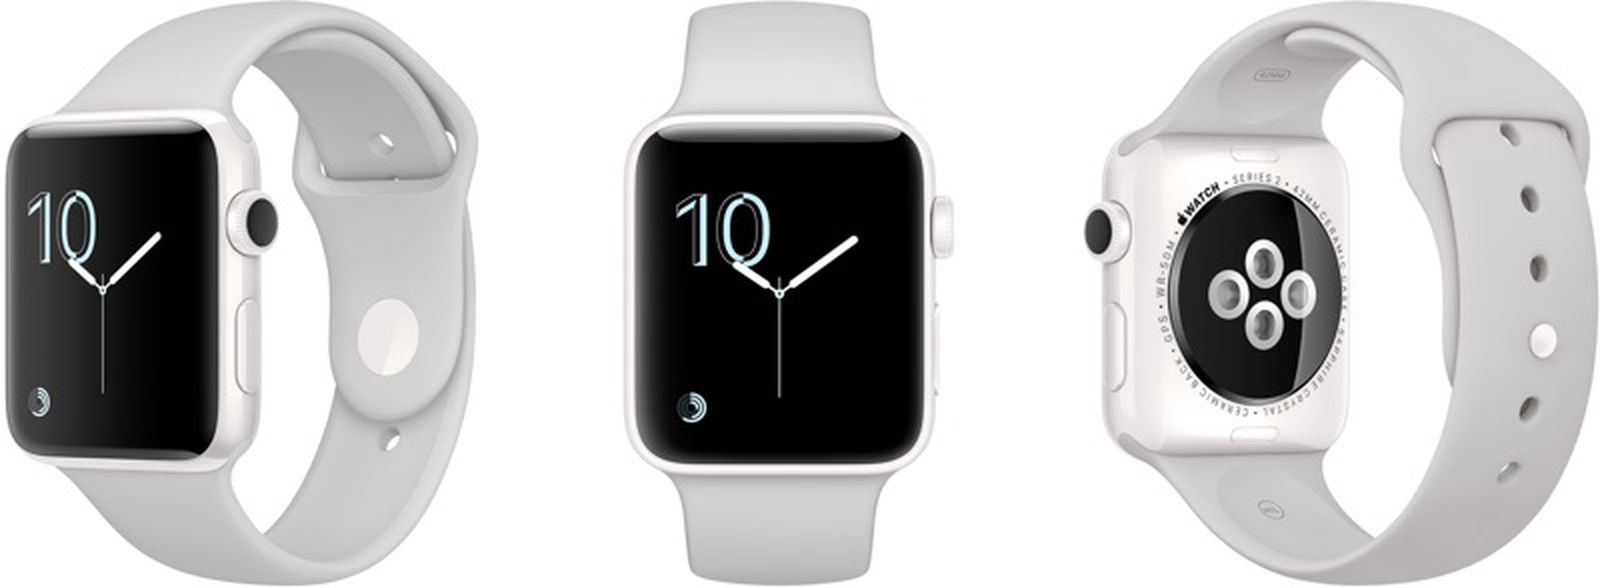 Blue sport band. Эппл вотч 3 поколение. Apple watch 3 38 mm. Apple watch Hermes 2 Series 38mm. Apple watch s3 LTE.